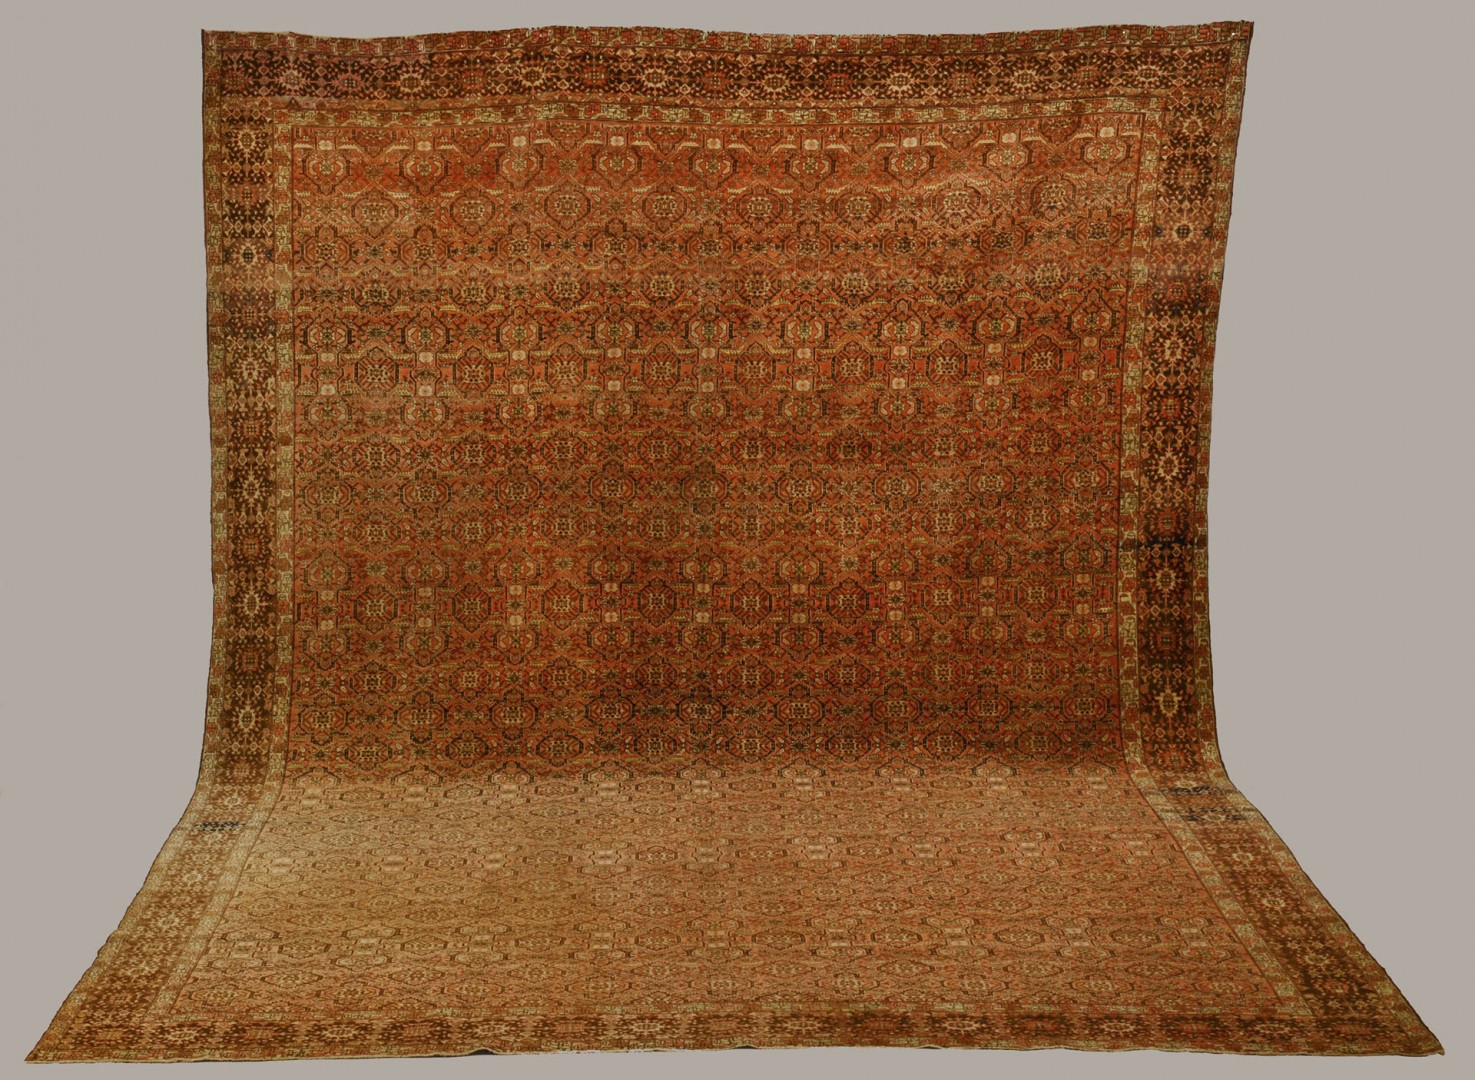 Lot 567: Large 12.5' x 18.4' Antique Persian Tabriz